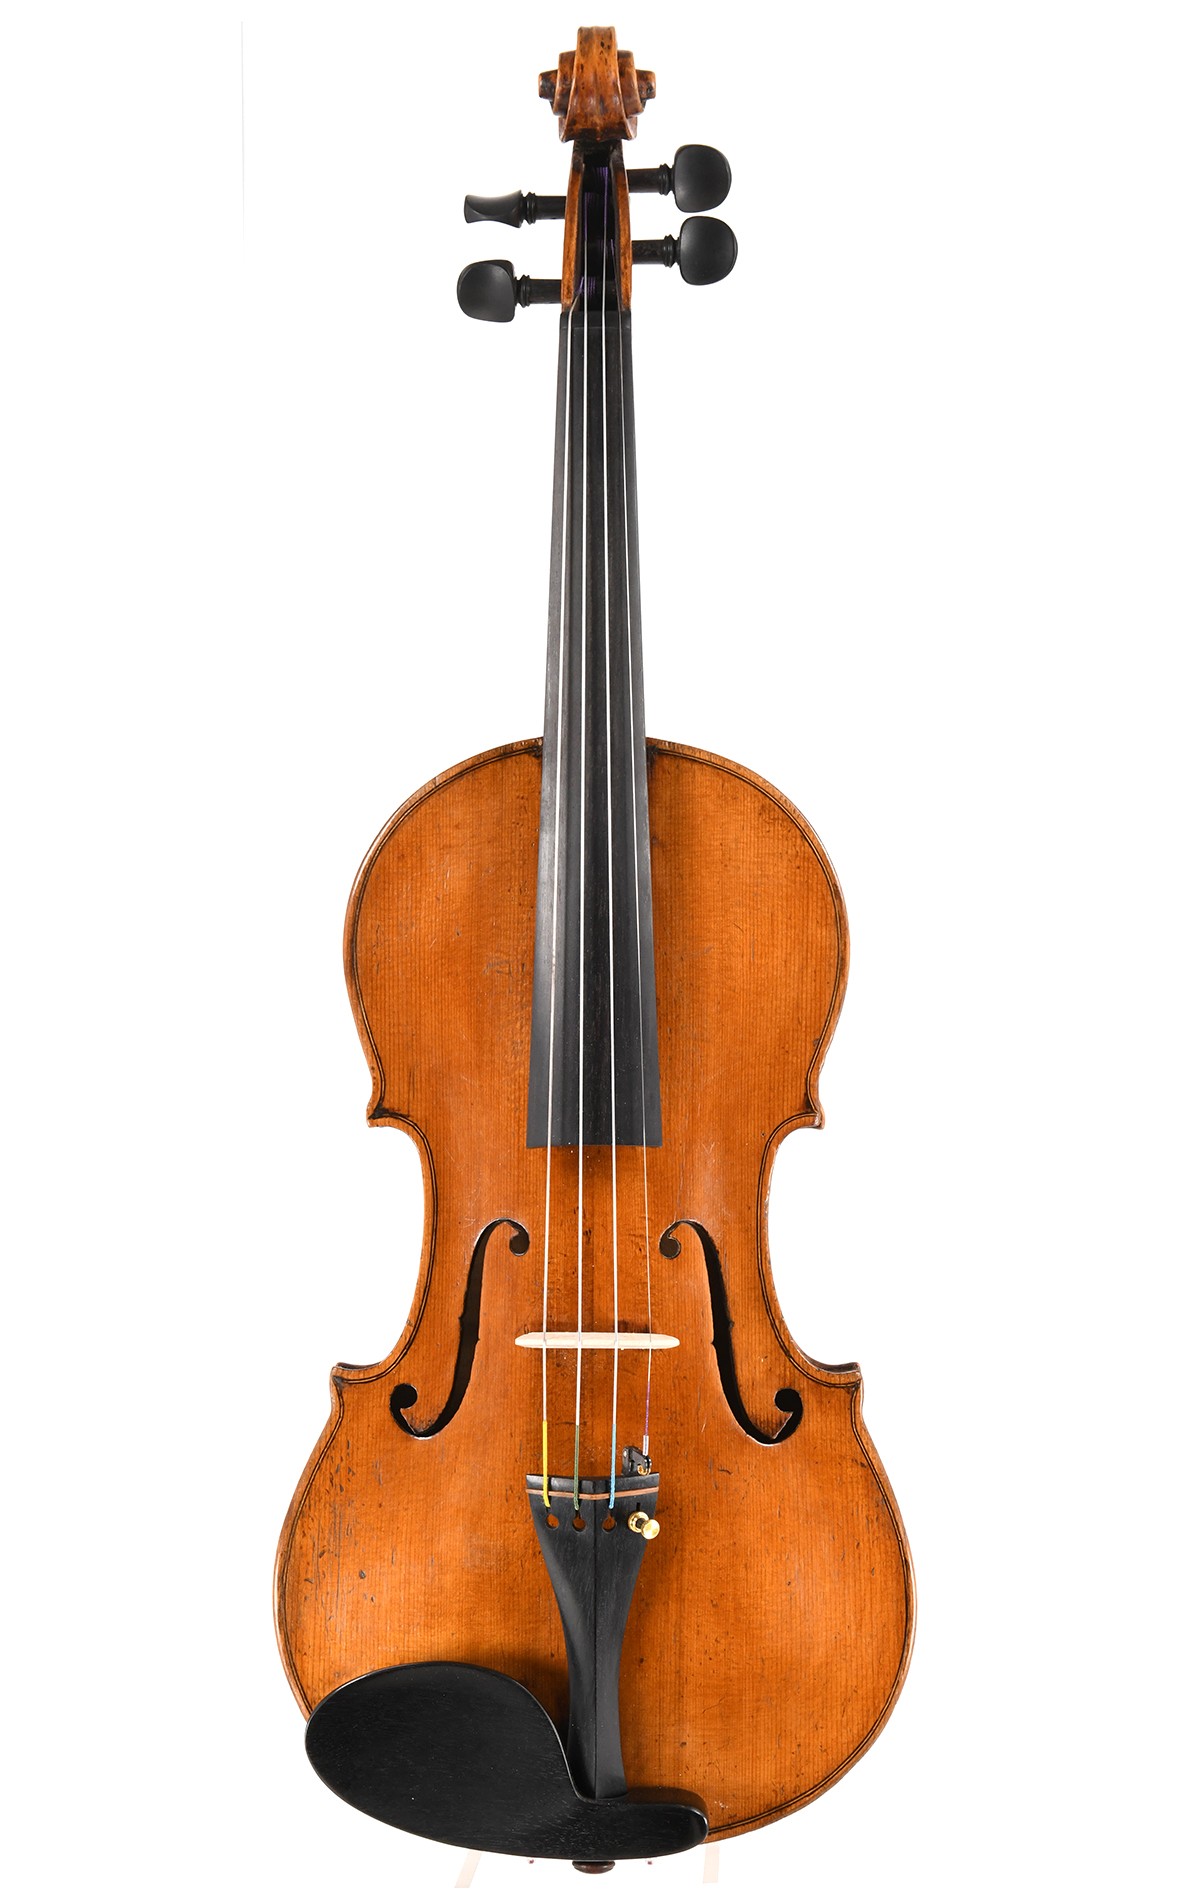 Interesting master violin, approx. 1800 - Alemannic school / Switzerland